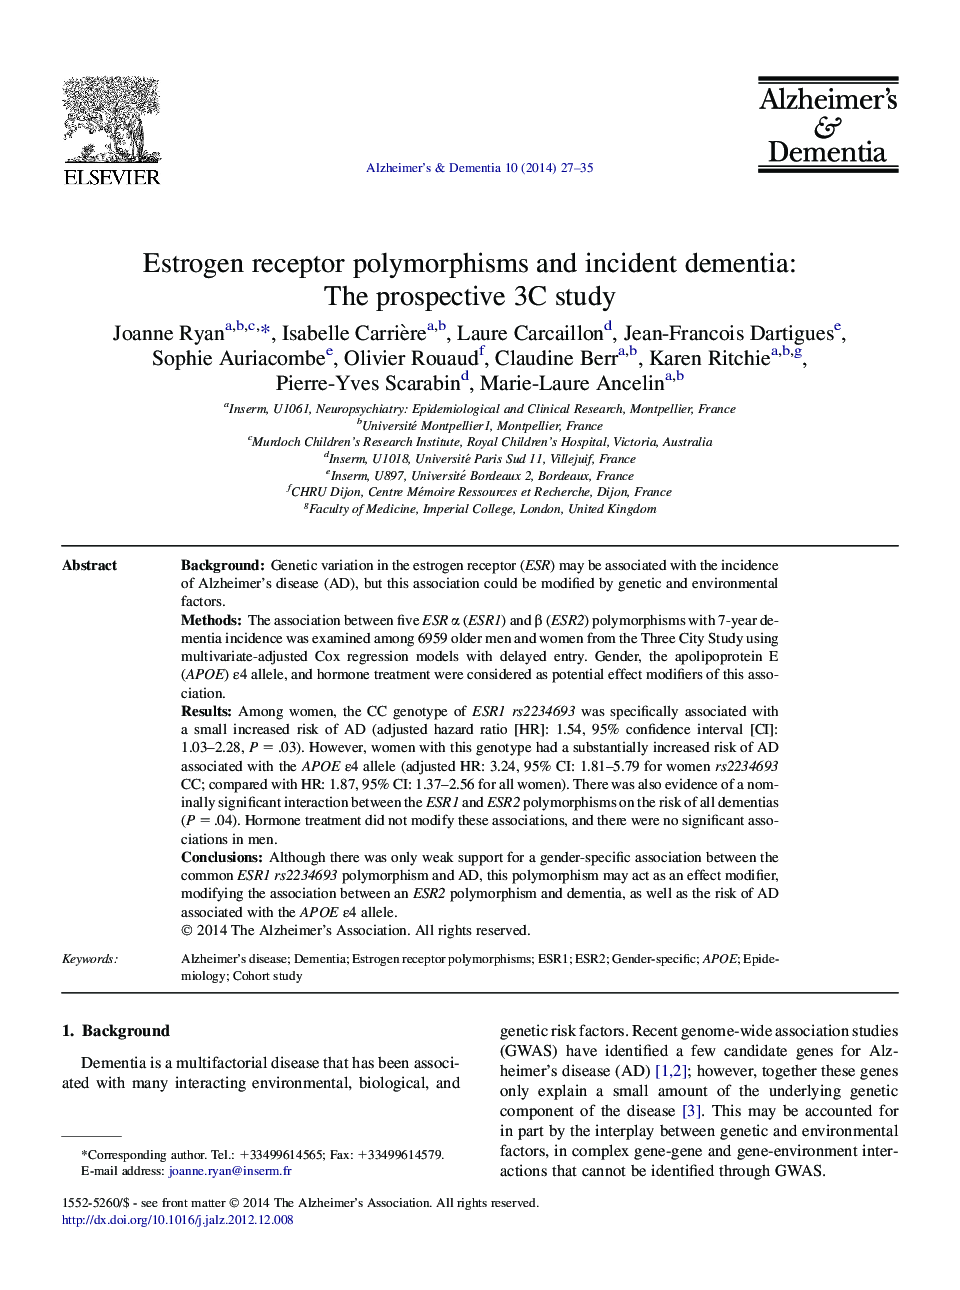 Featured ArticleEstrogen receptor polymorphisms and incident dementia: The prospective 3C study